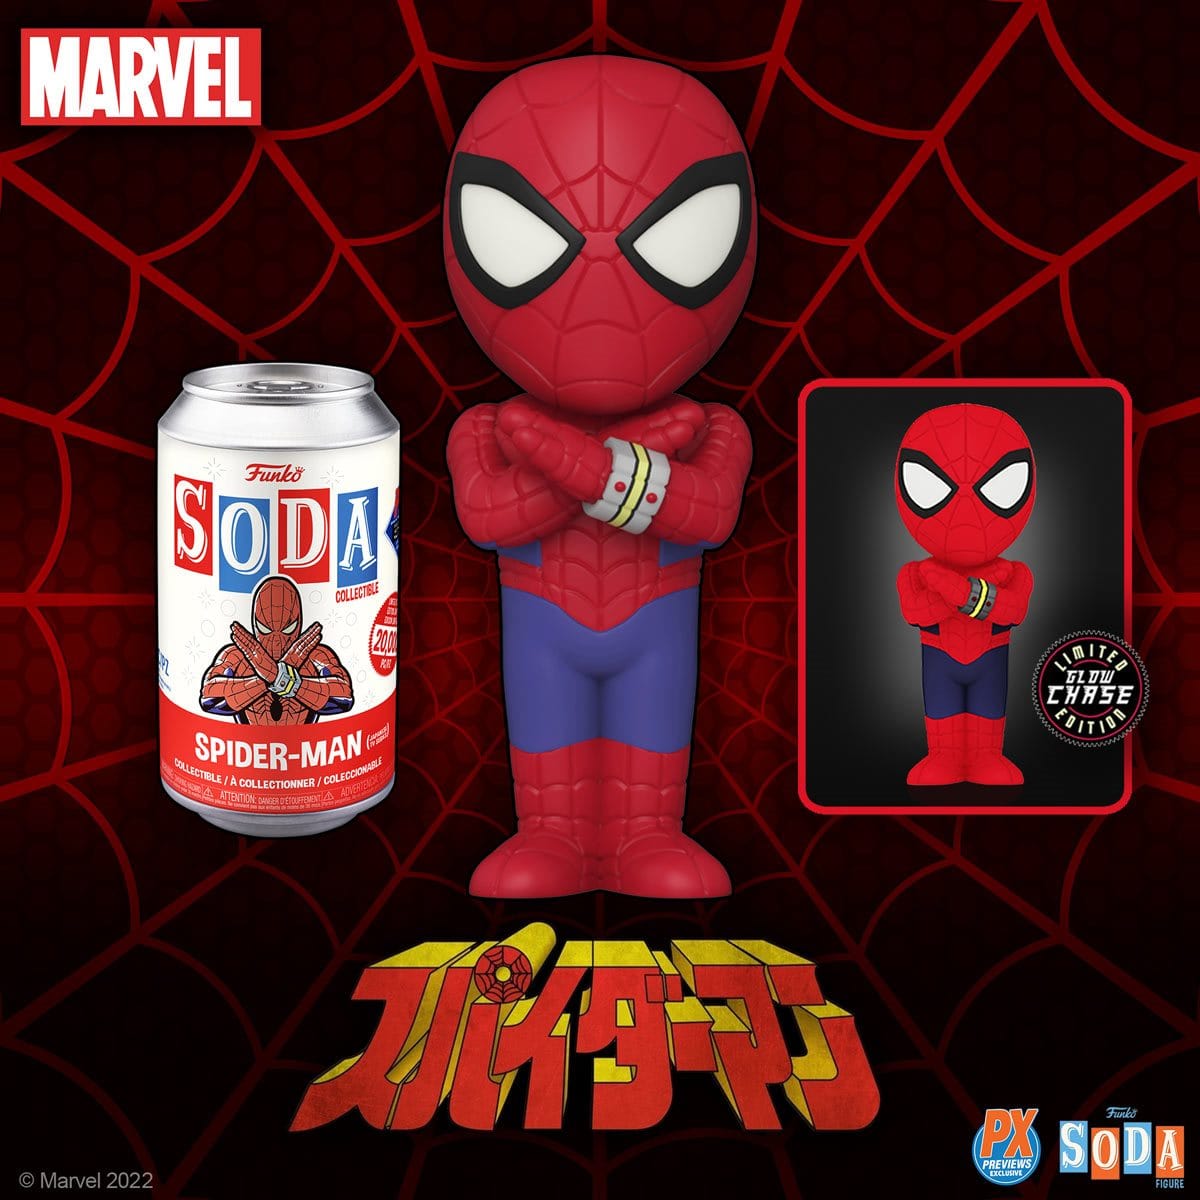 Funko Vinyl Soda Marvel Japanese Spider-Man PX Previews Exclusive